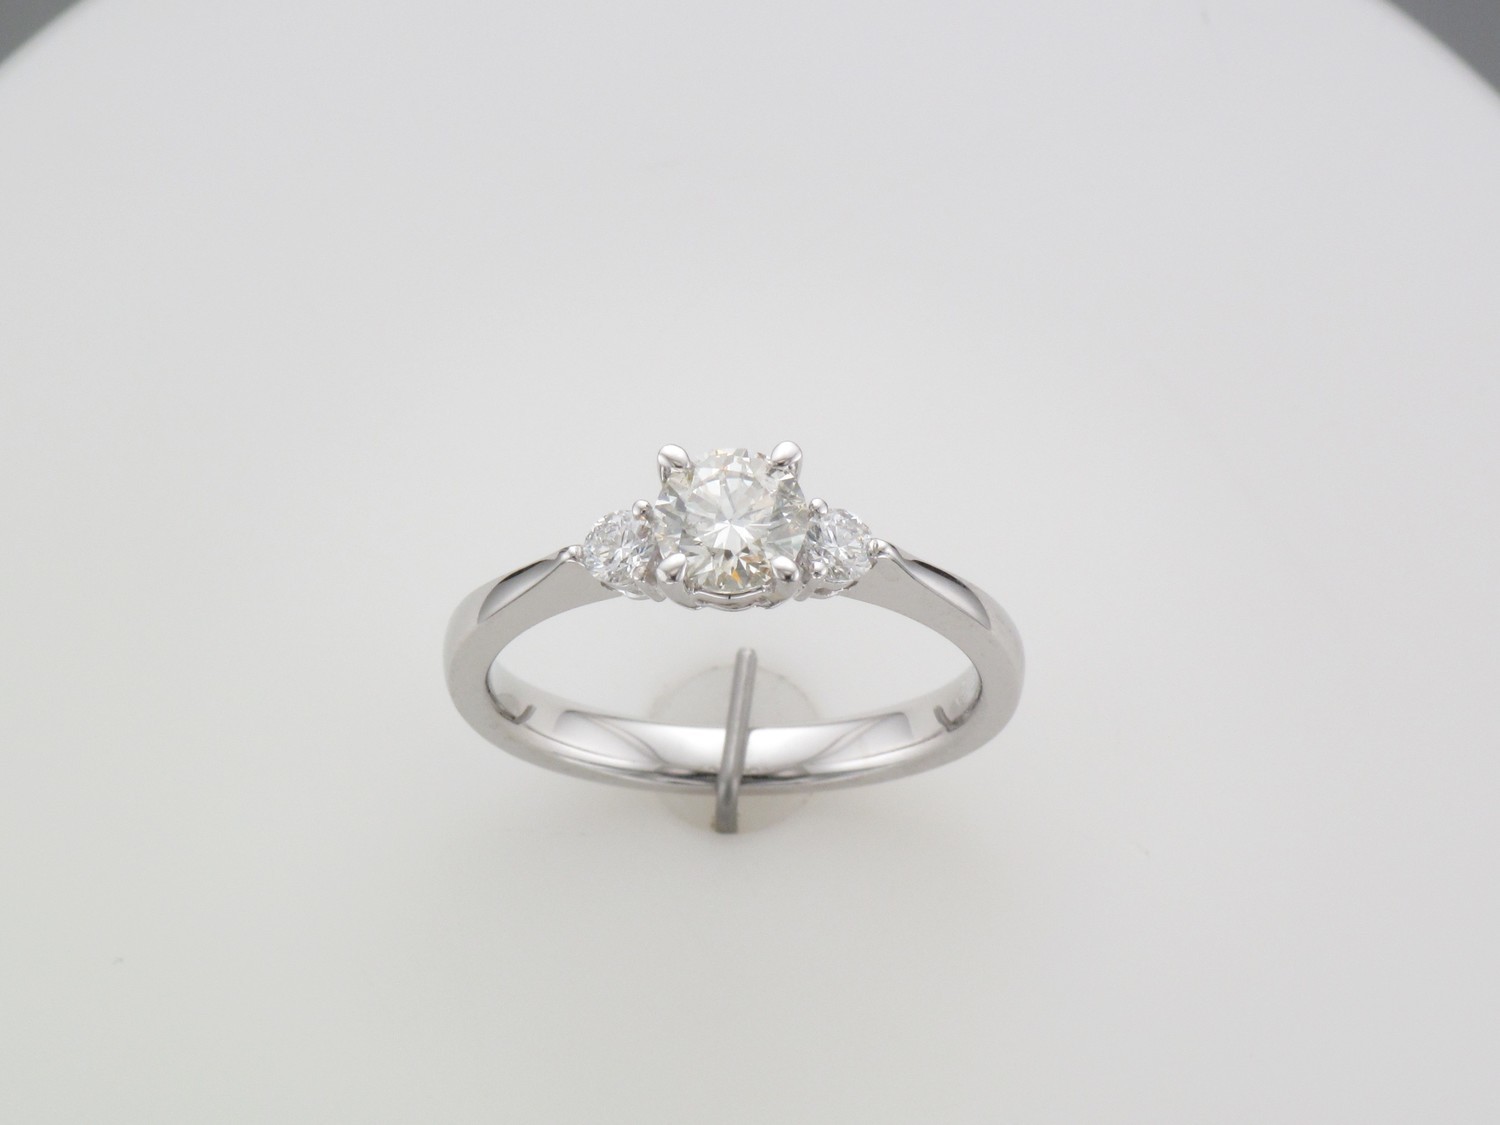 Ladies 18 carat white gold 3 stone diamond ring